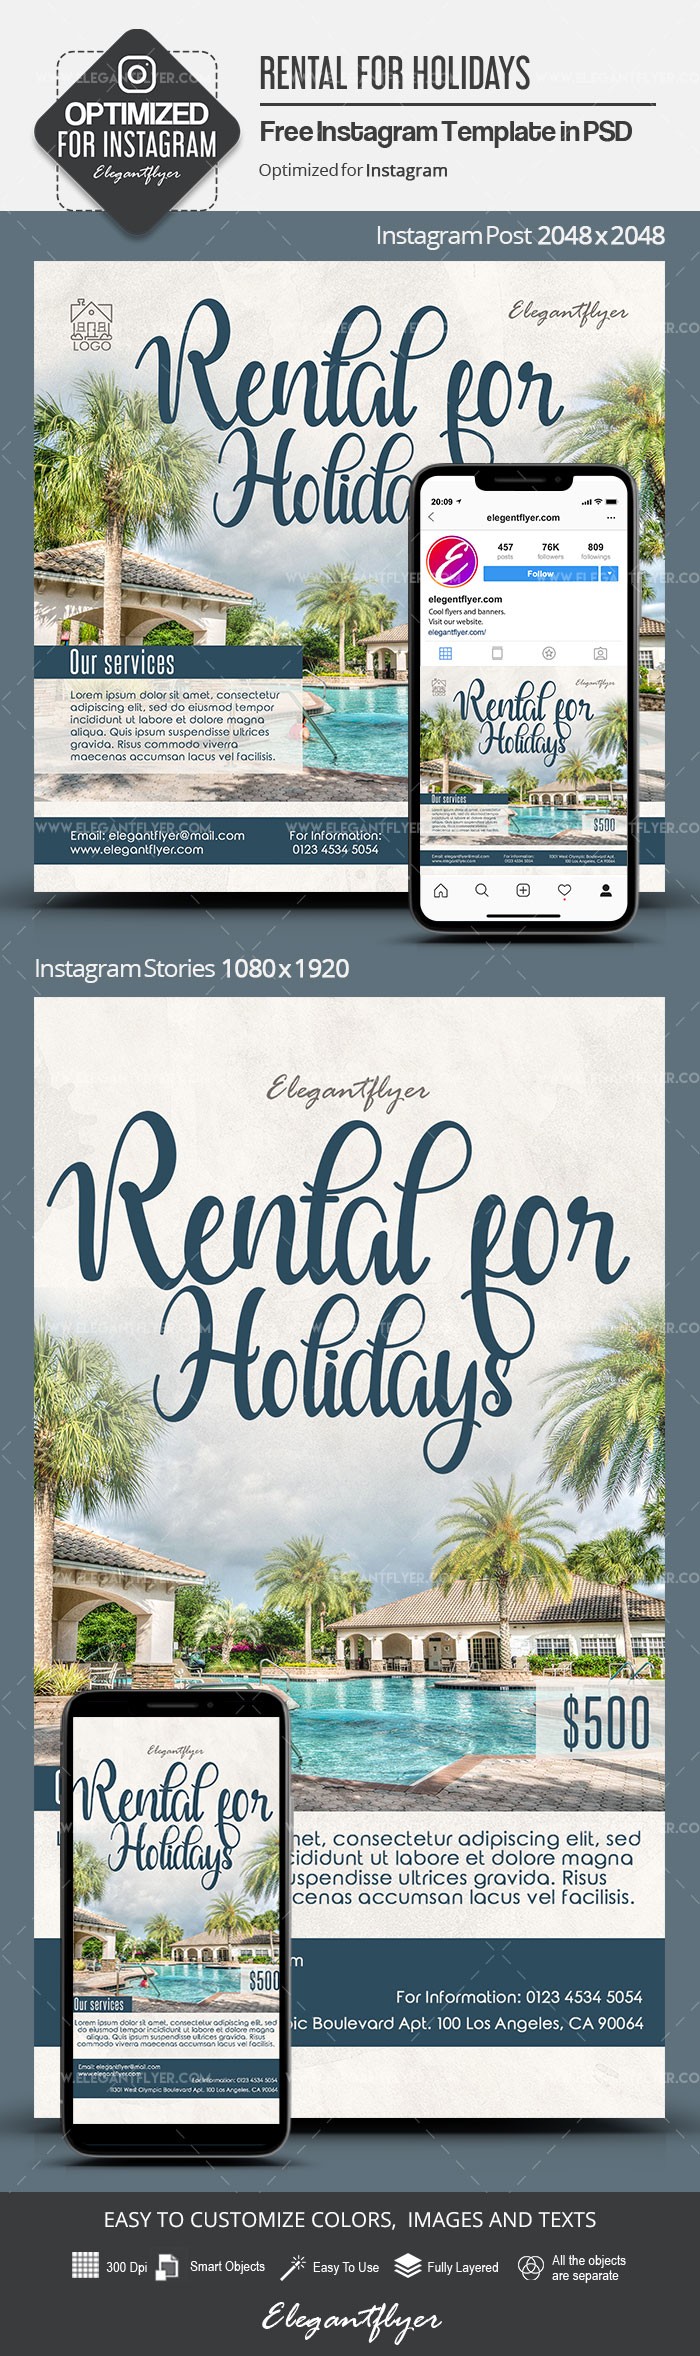 Rental for Holidays by ElegantFlyer